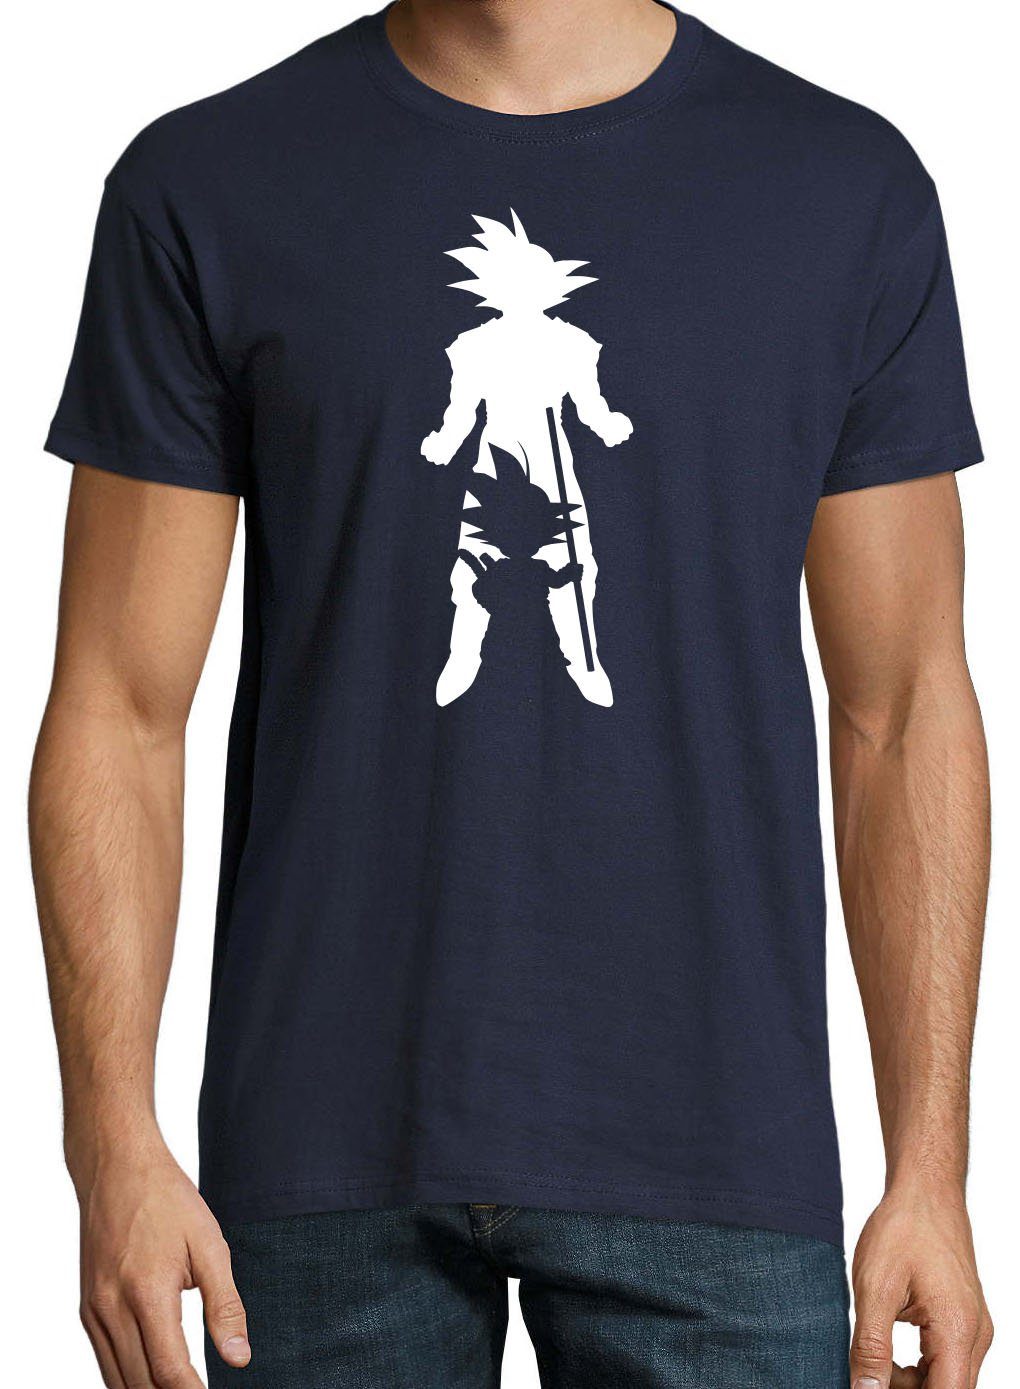 Navyblau trendigem Frontprint mit Youth T-Shirt Goku Shirt Designz Herren Super